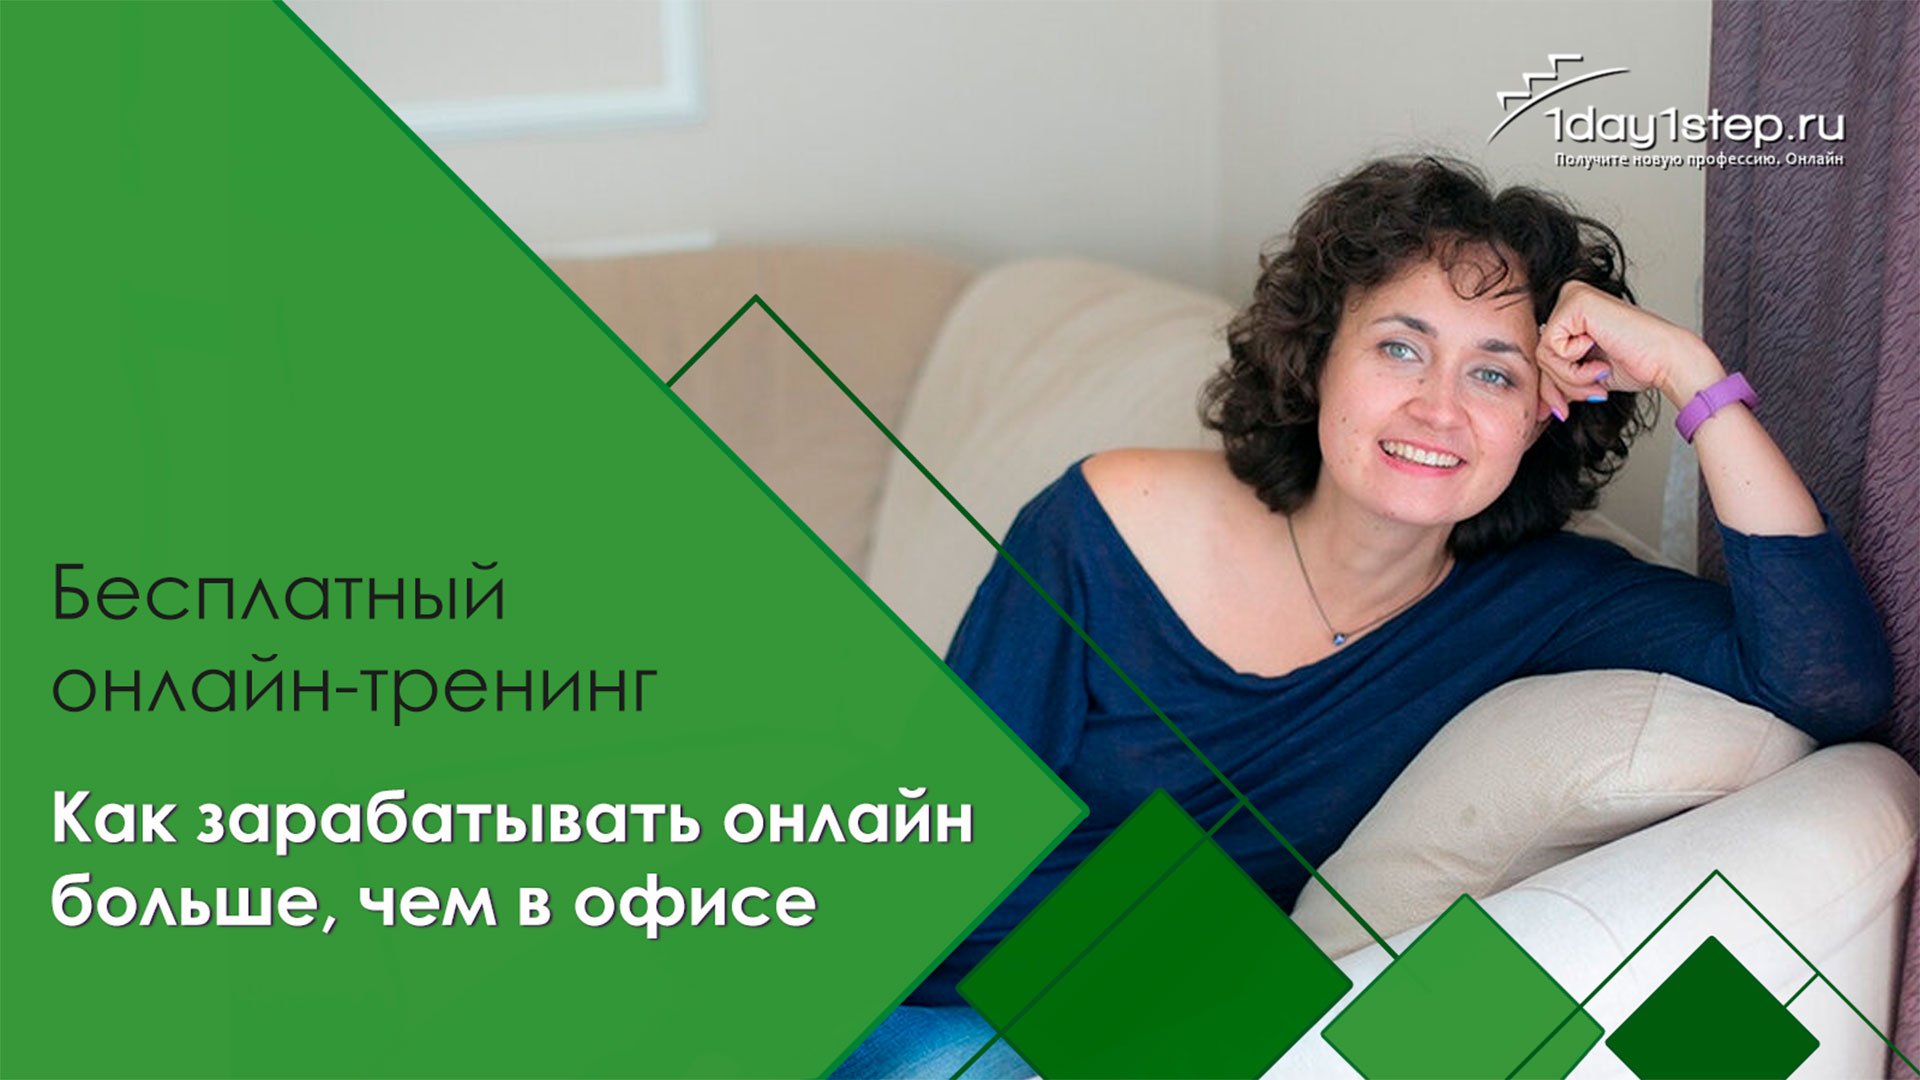 Бесплатный онлайн тренинг на Таргетолога, Наталья Одегова.